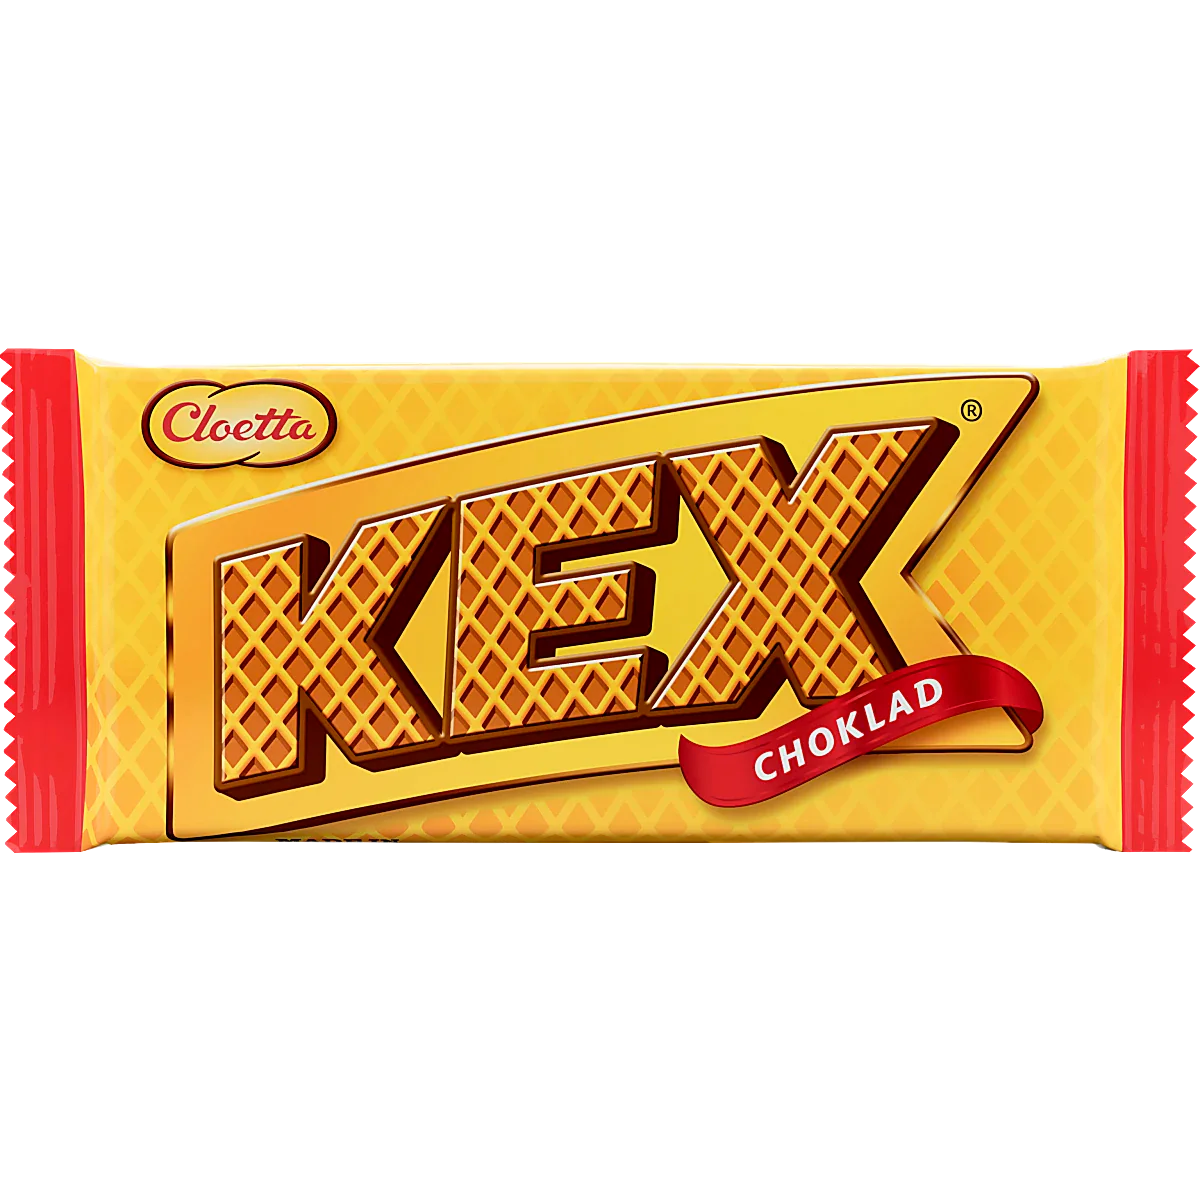 Cloetta Kexchoklad by Swedish Candy Store